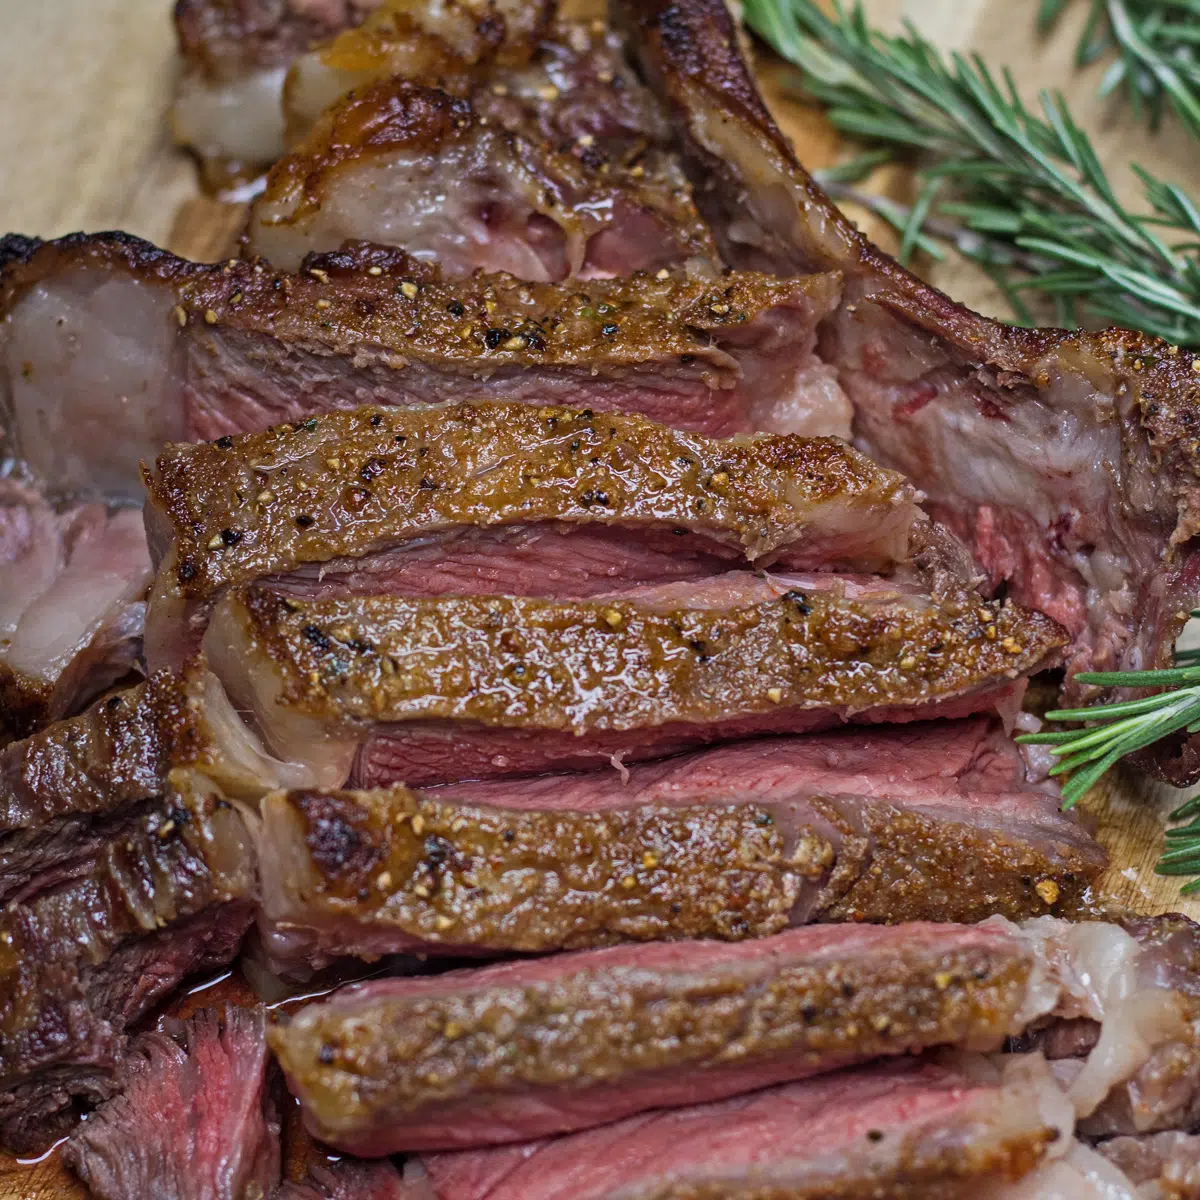 Groot vierkant van de omgekeerde aangebraden tomahawk ribeye steak.